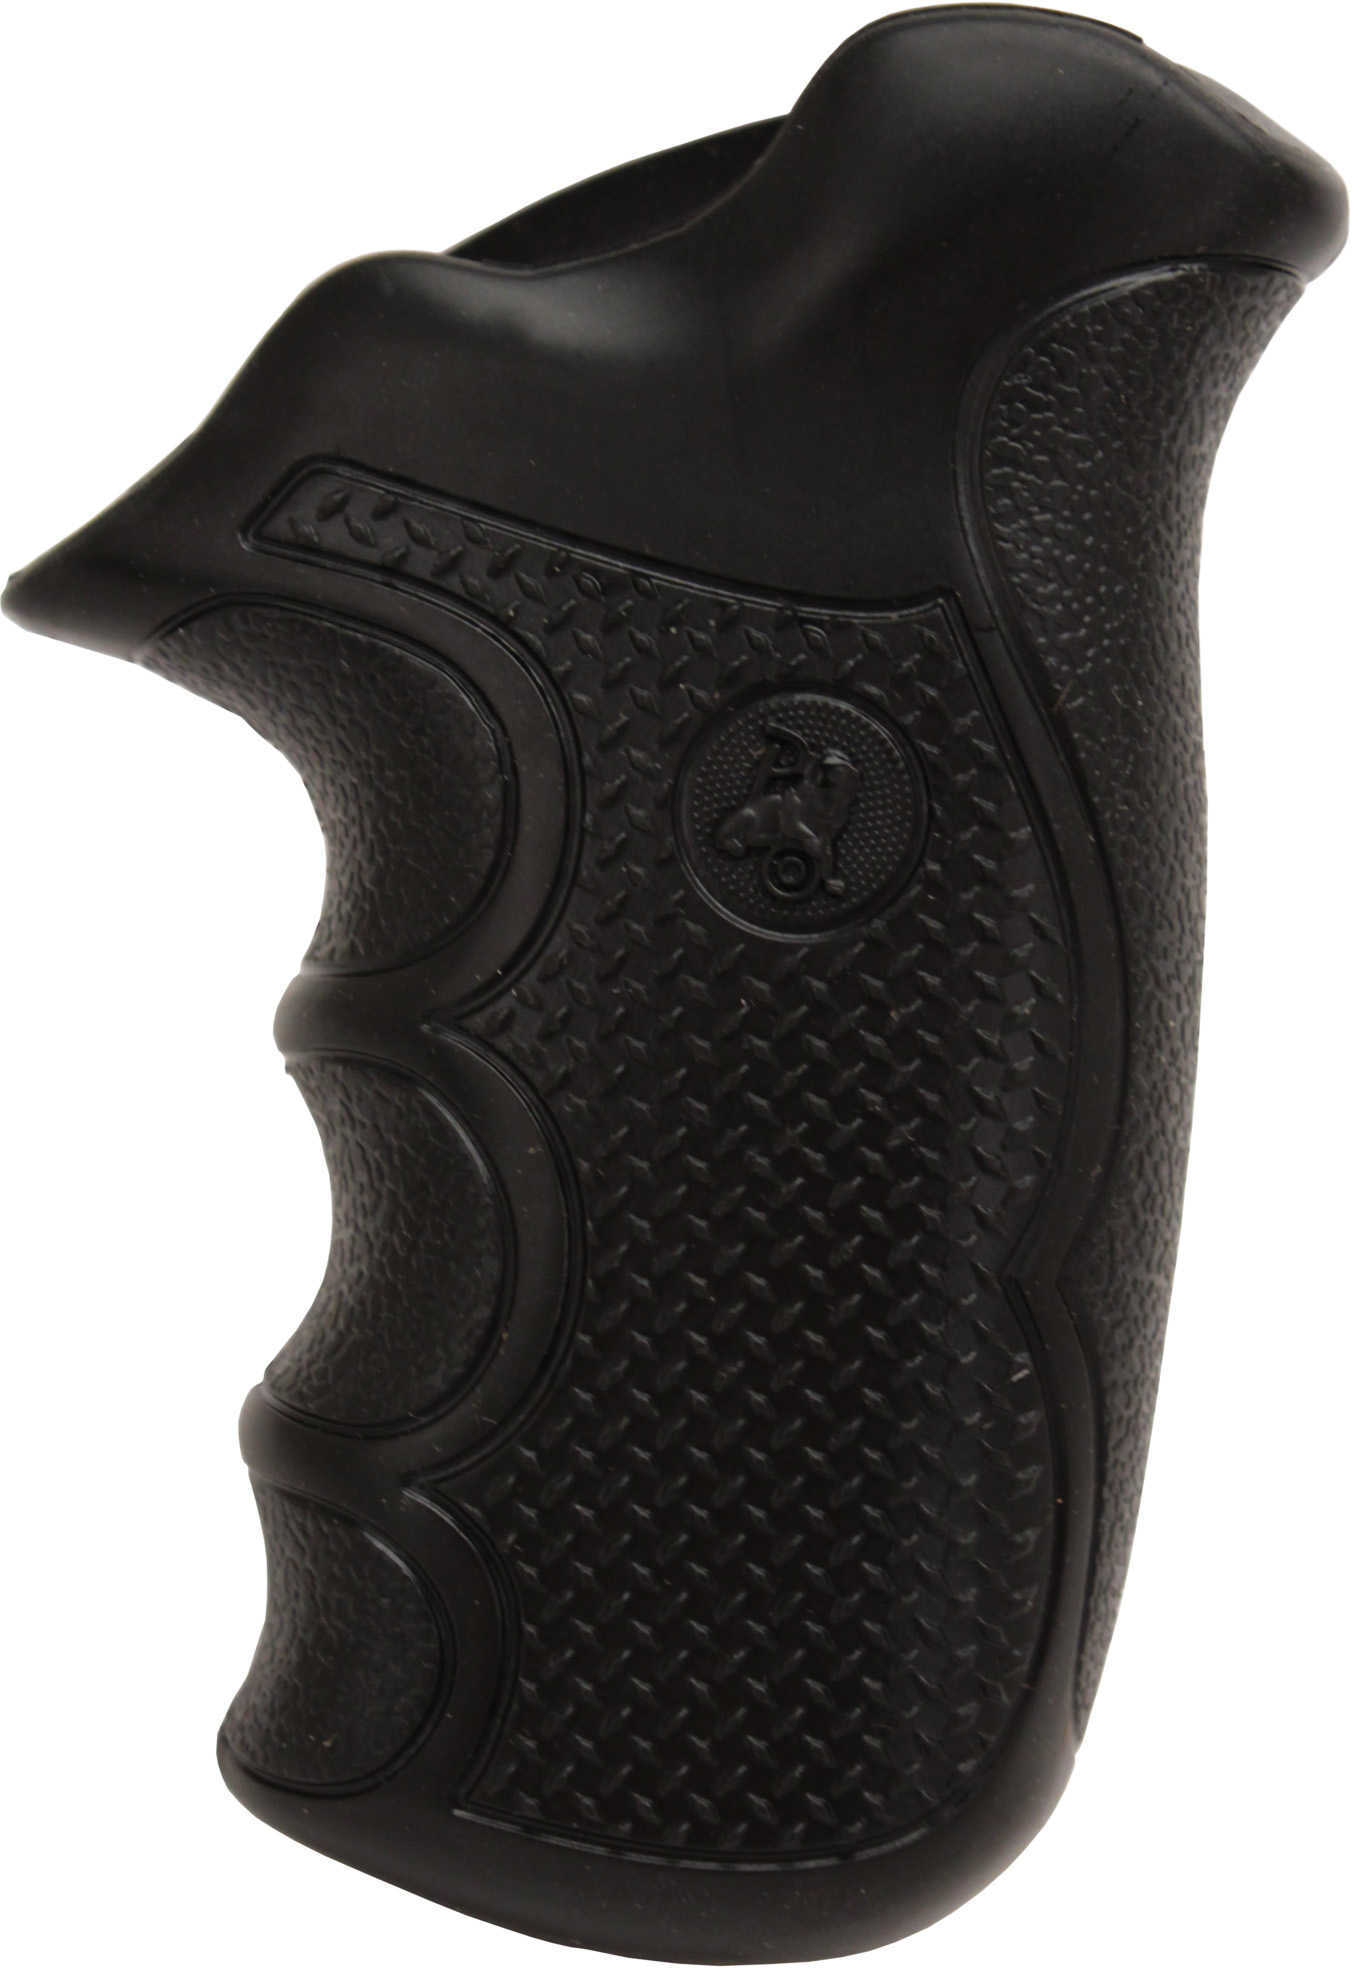 Pachmayr Dimond Pro Grip Black Taurus Xl Frame 02472